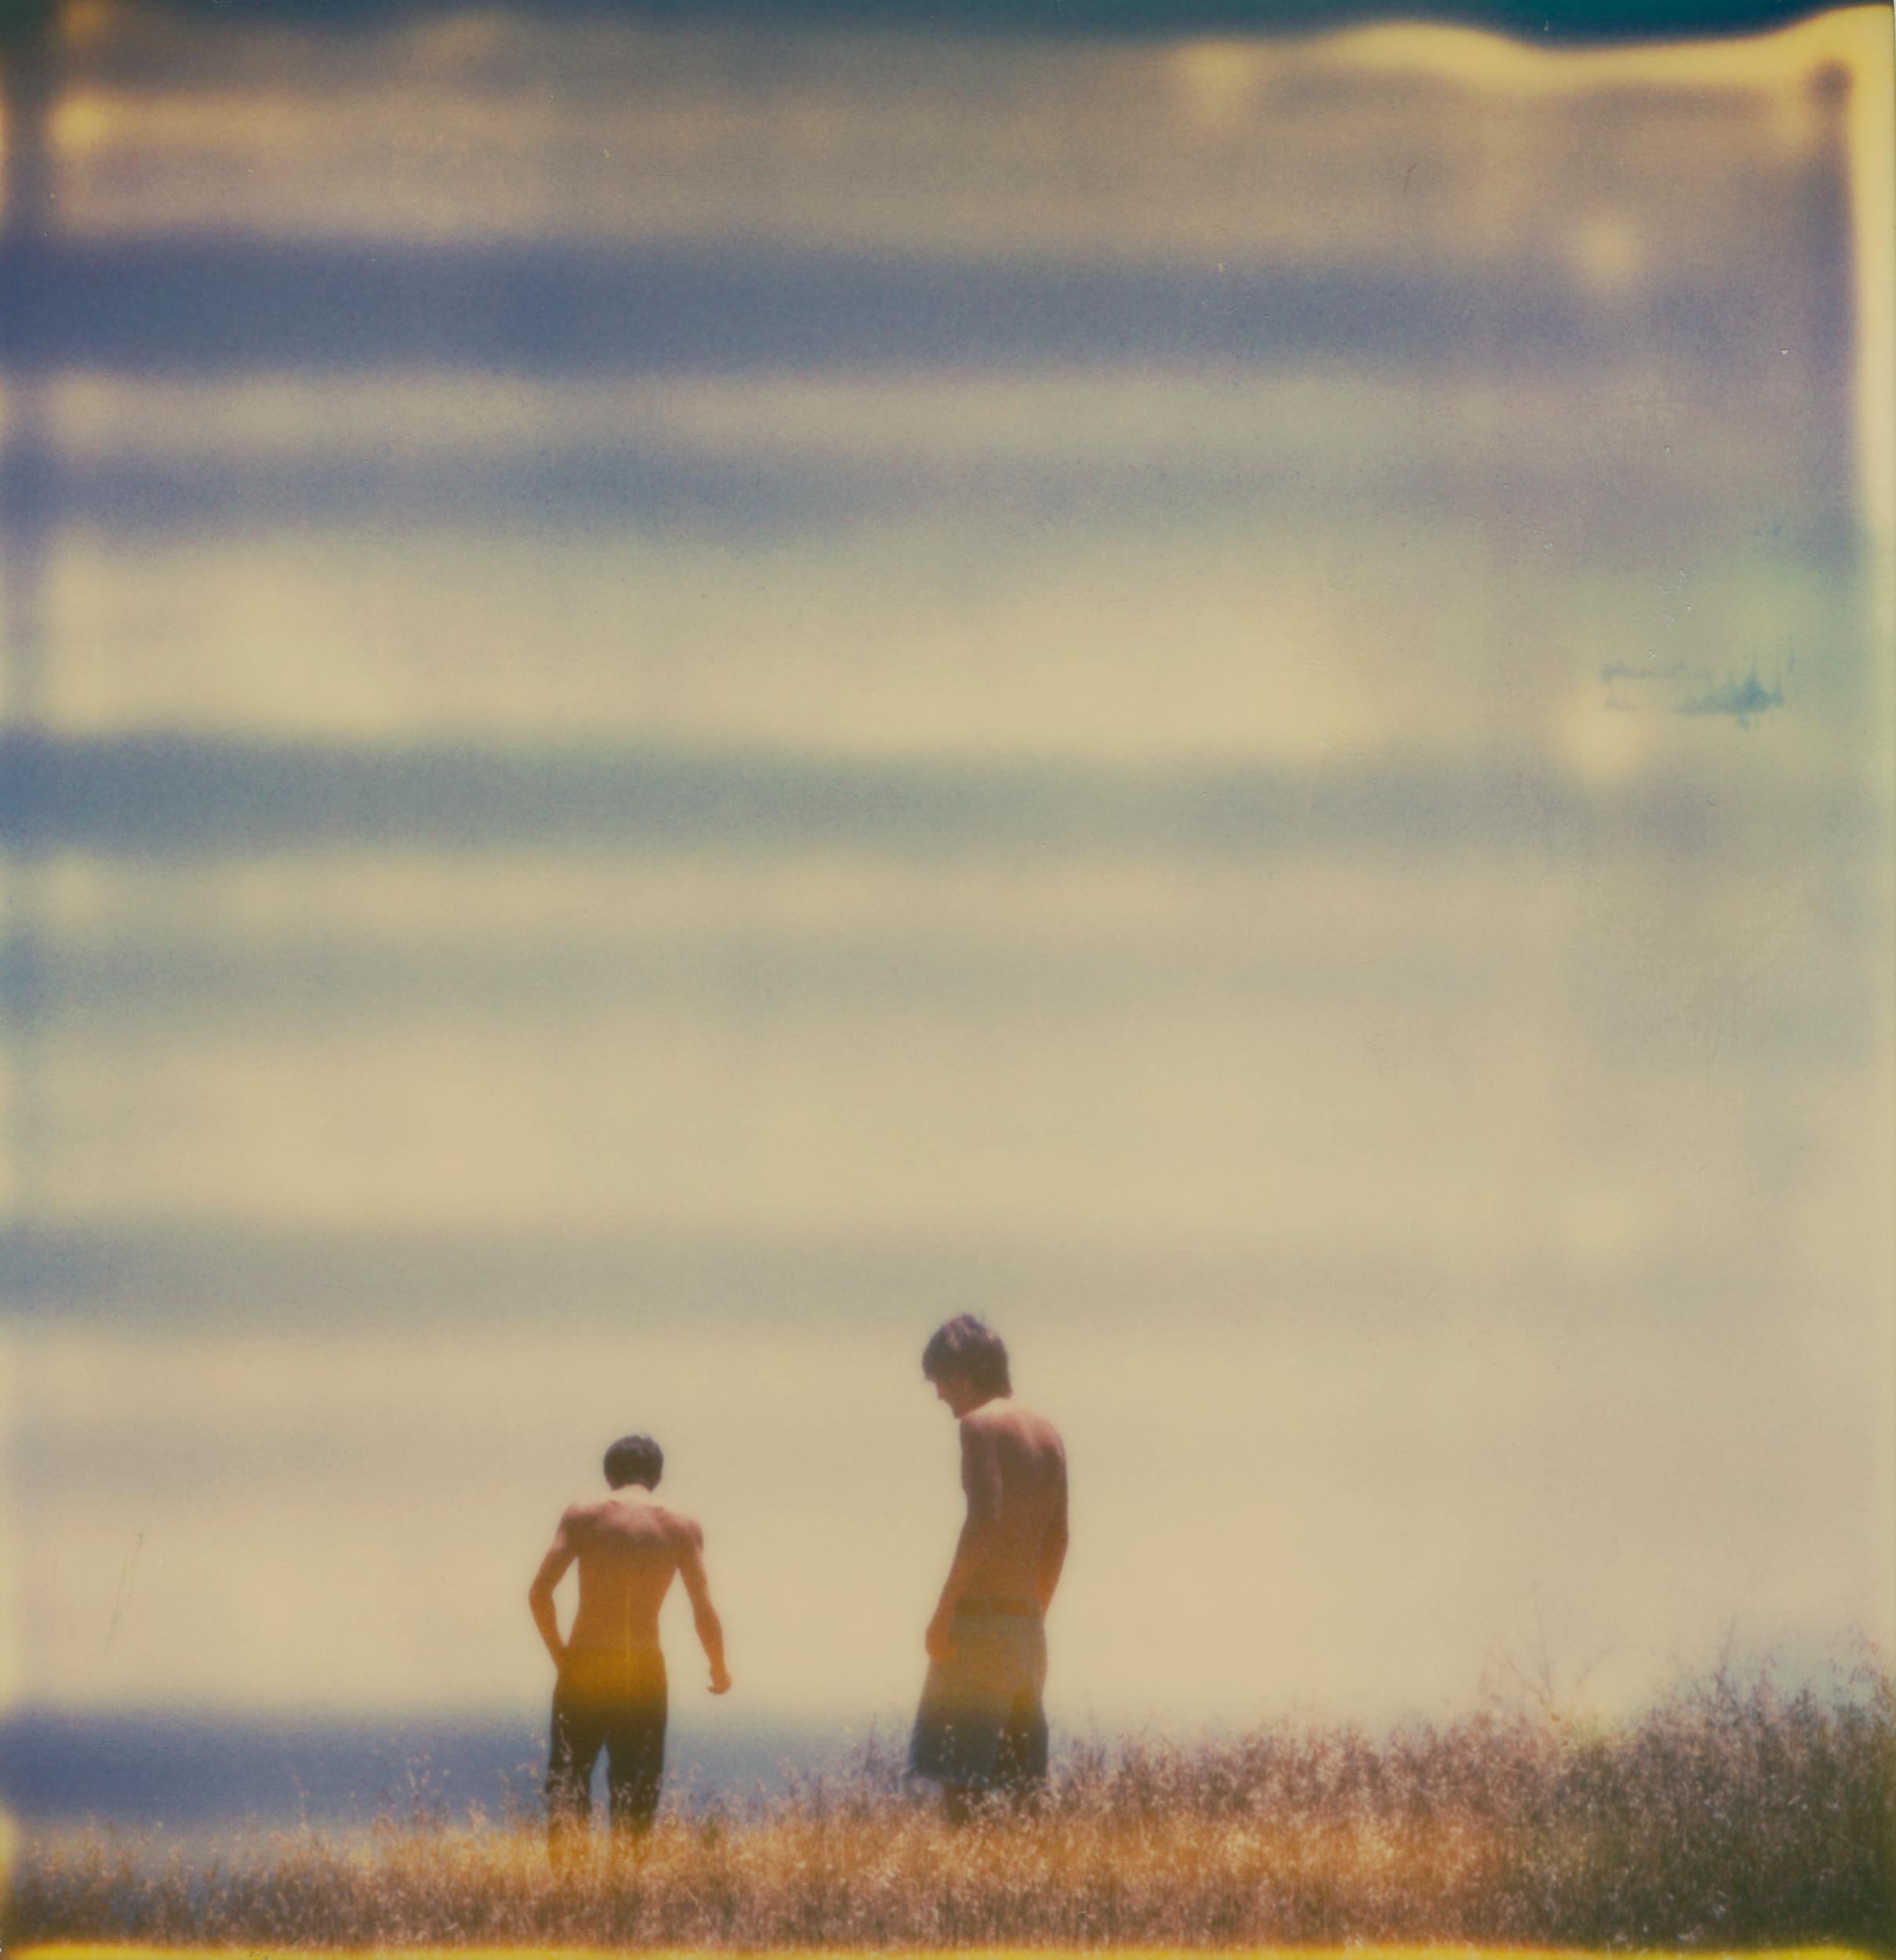 Stefanie Schneider Figurative Photograph - Renée's Dream - The Boys (Days of Heaven) - Landscape, Horse, Boys